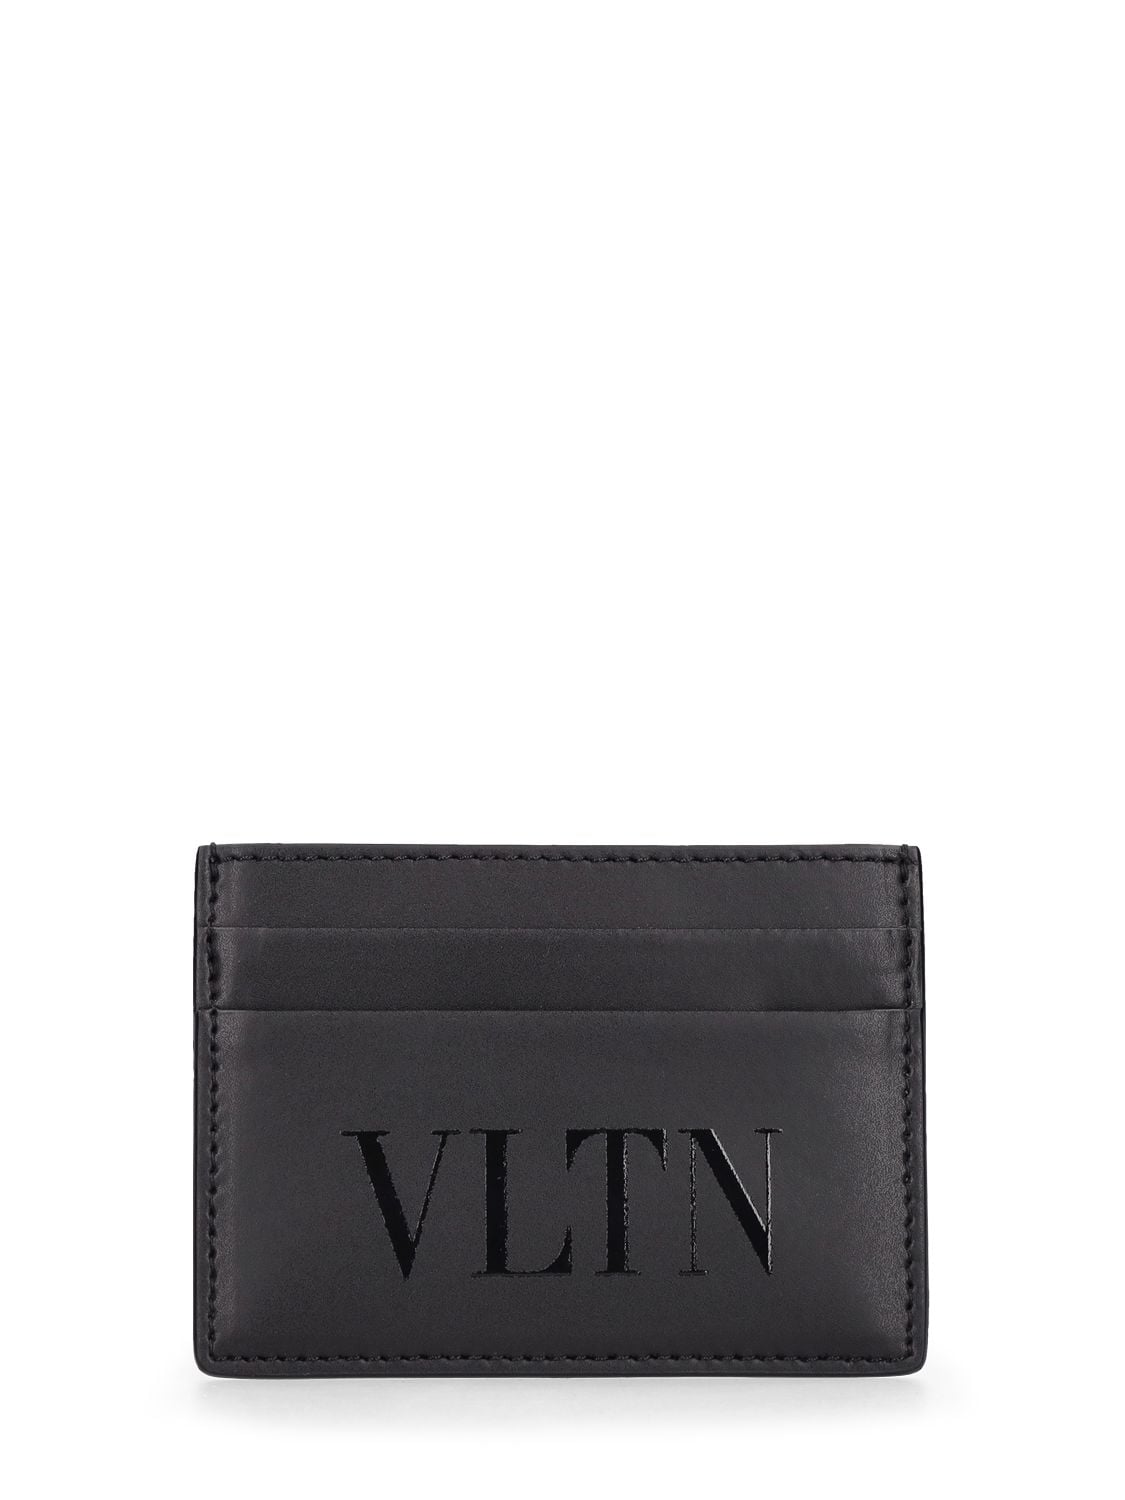 Valentino Garavani Vltn Small Credit Card Holder In Black